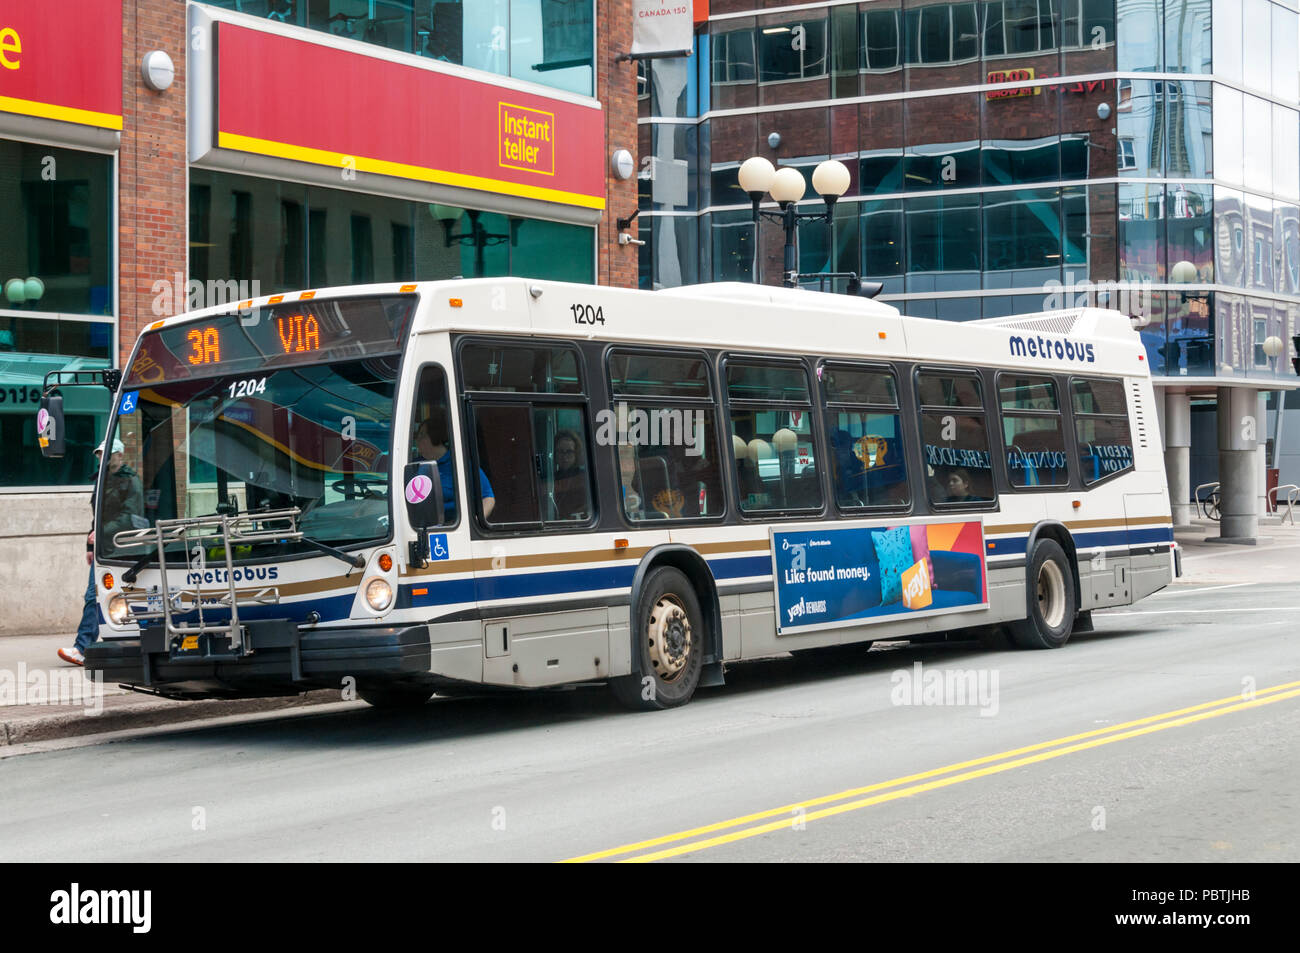 A Metrobus in Water Street, St John's, Newfoundland Stock Photo - Alamy